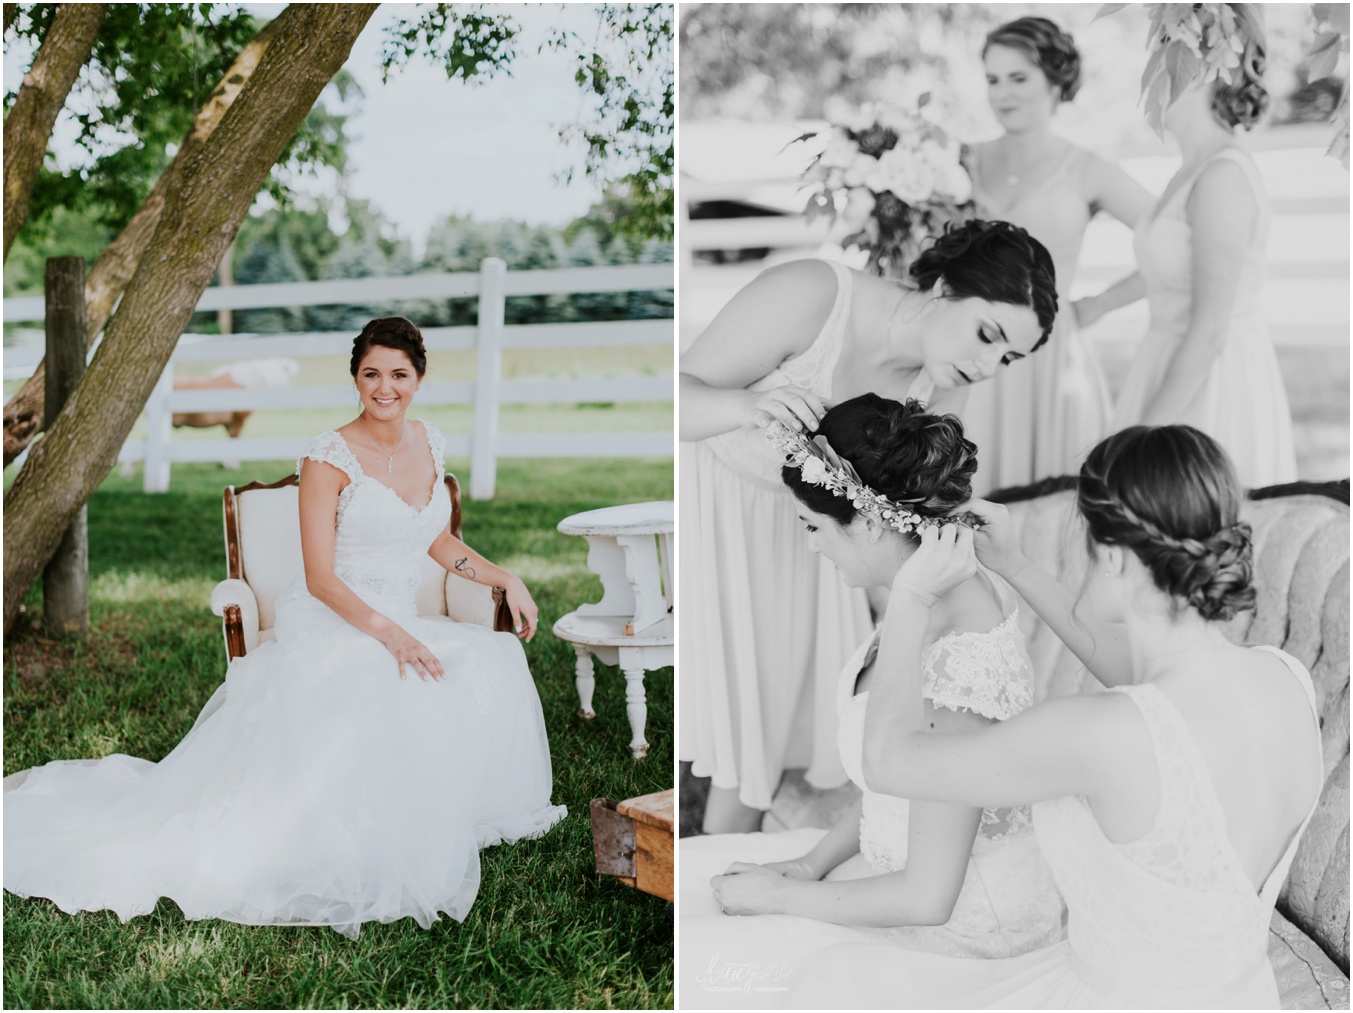 Katie Grace Photography, Hydrangea Blue Barn, Blush Bridesmaids Dress, Floral Crown, Cowboy Boots